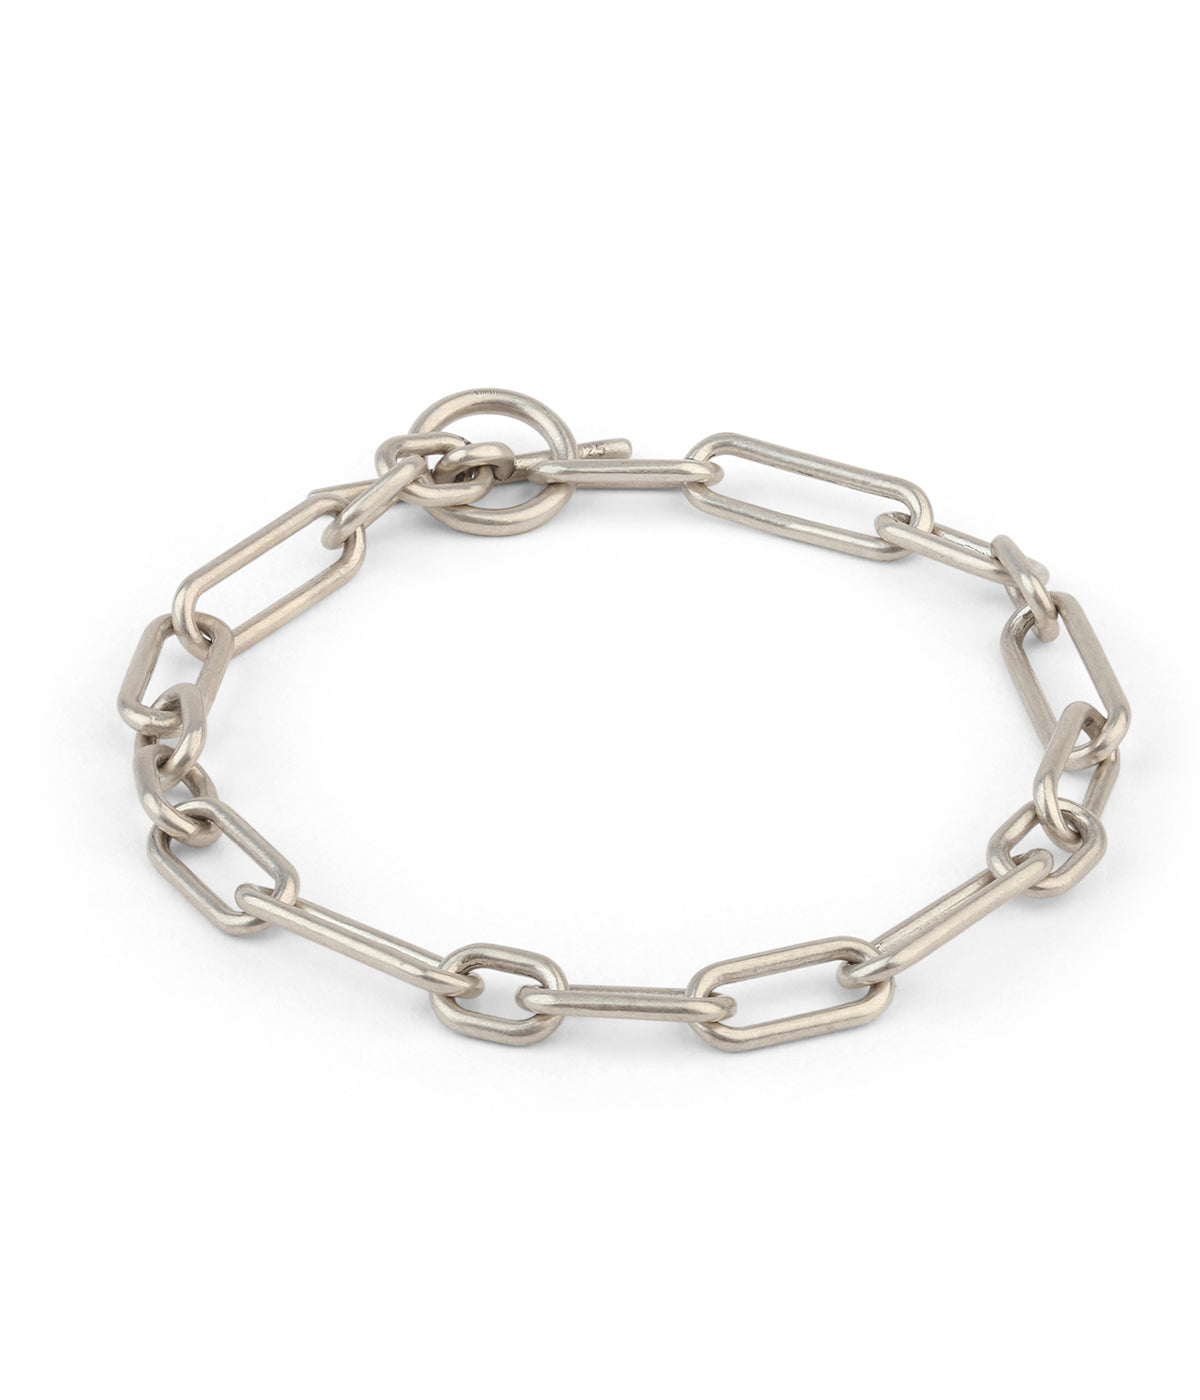 The Ovalado Bracelet in Silver